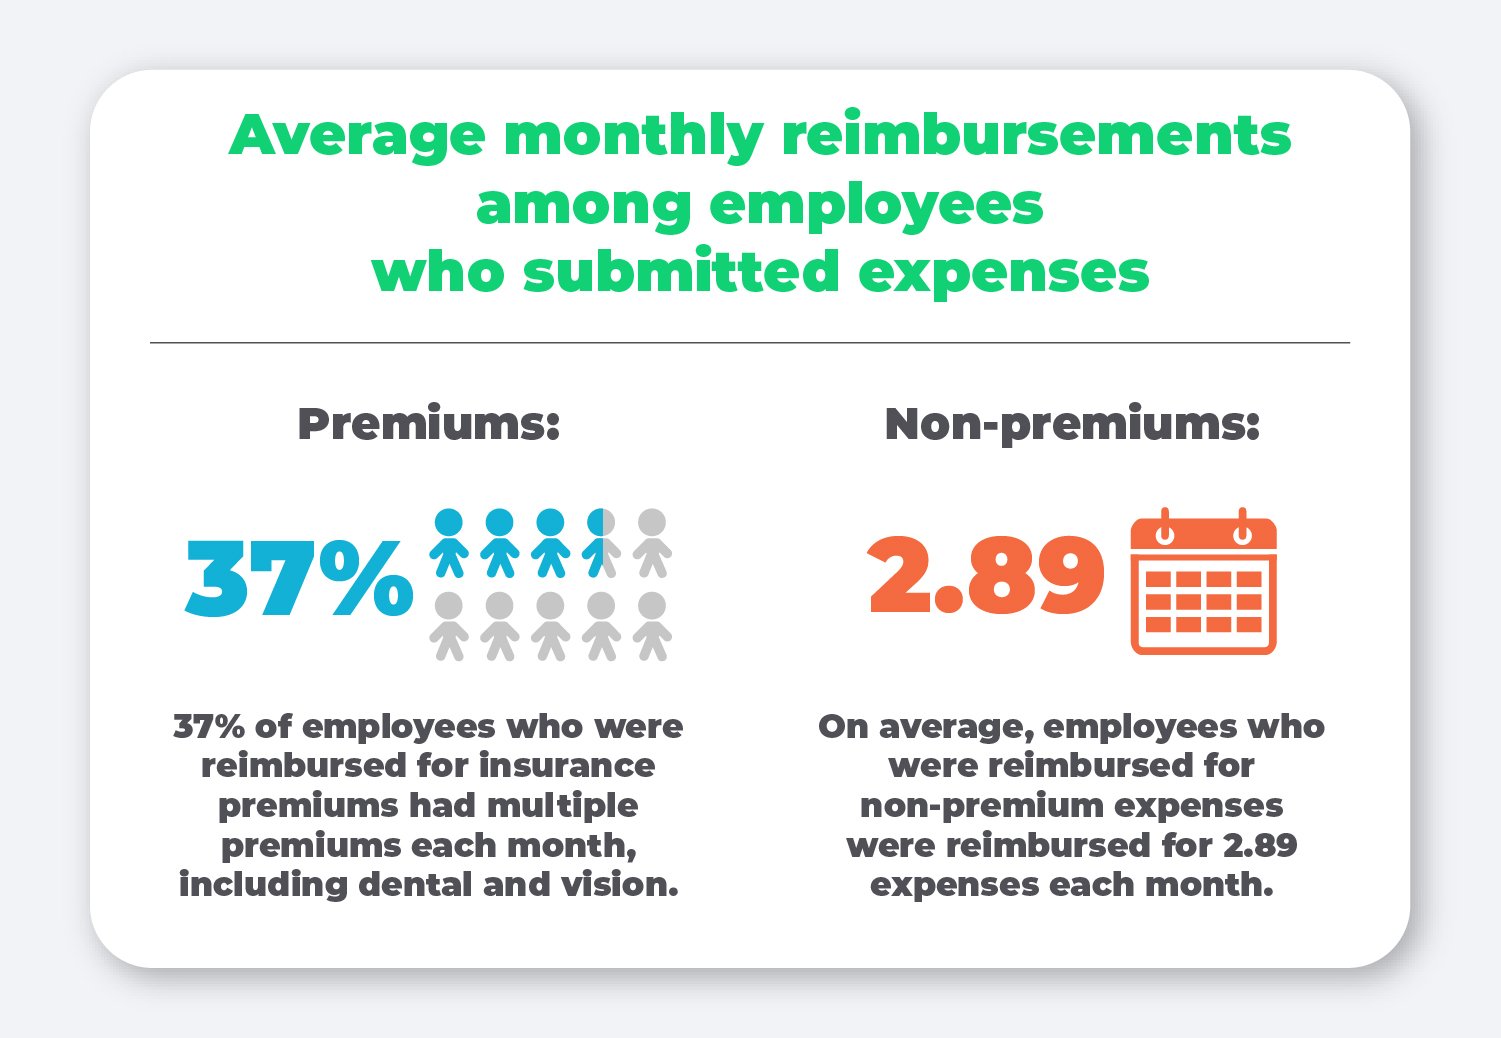 Average monthly reimbursements among employees who submitted expenses.